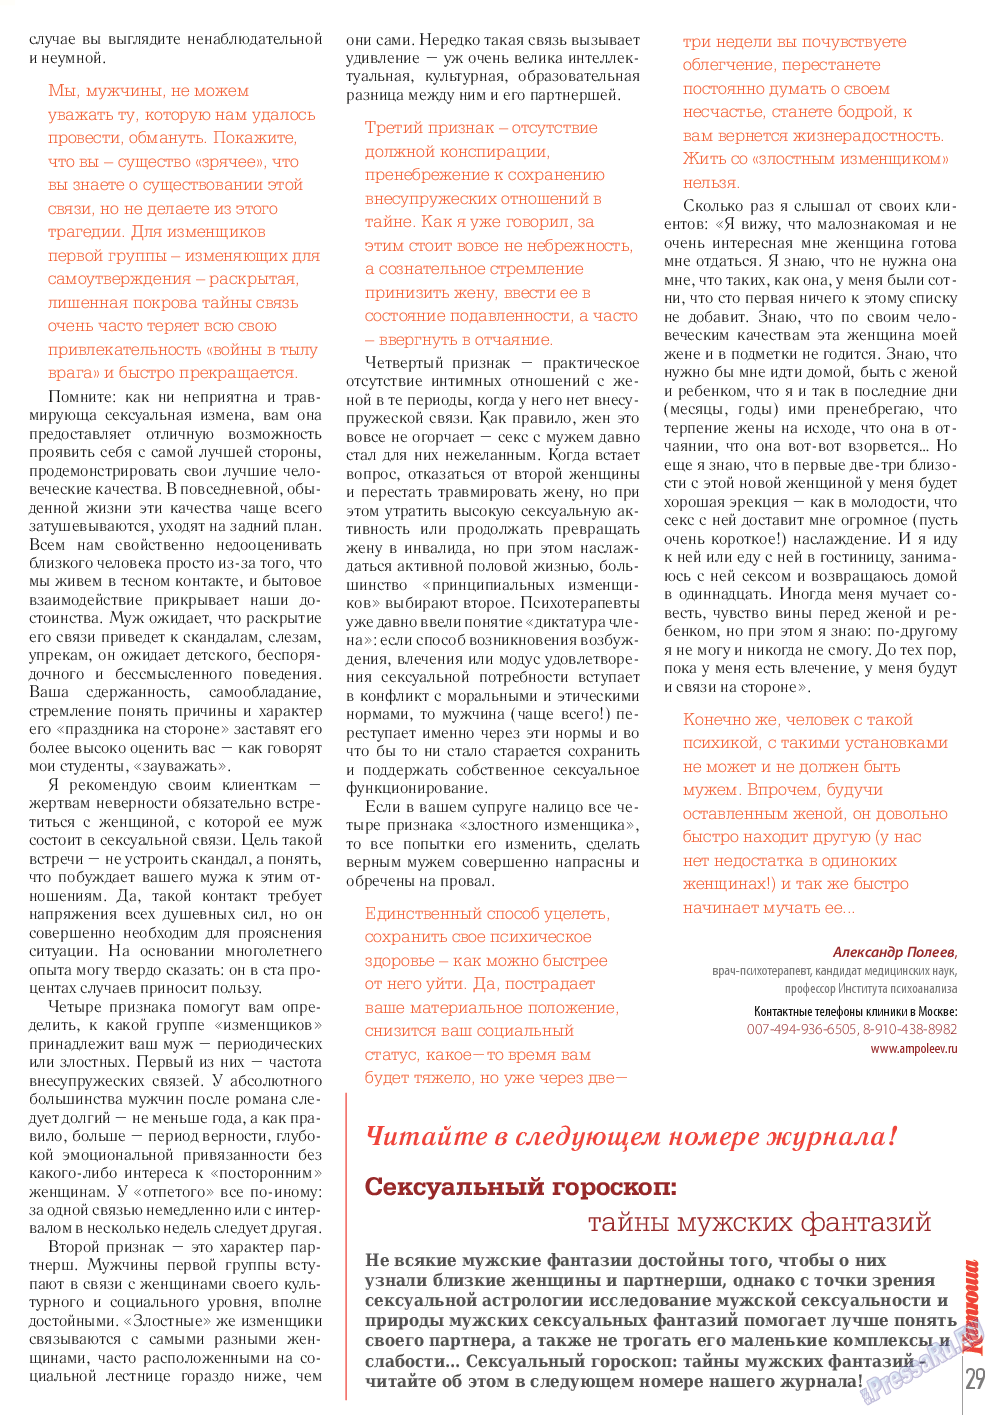 Катюша, журнал. 2013 №37 стр.29